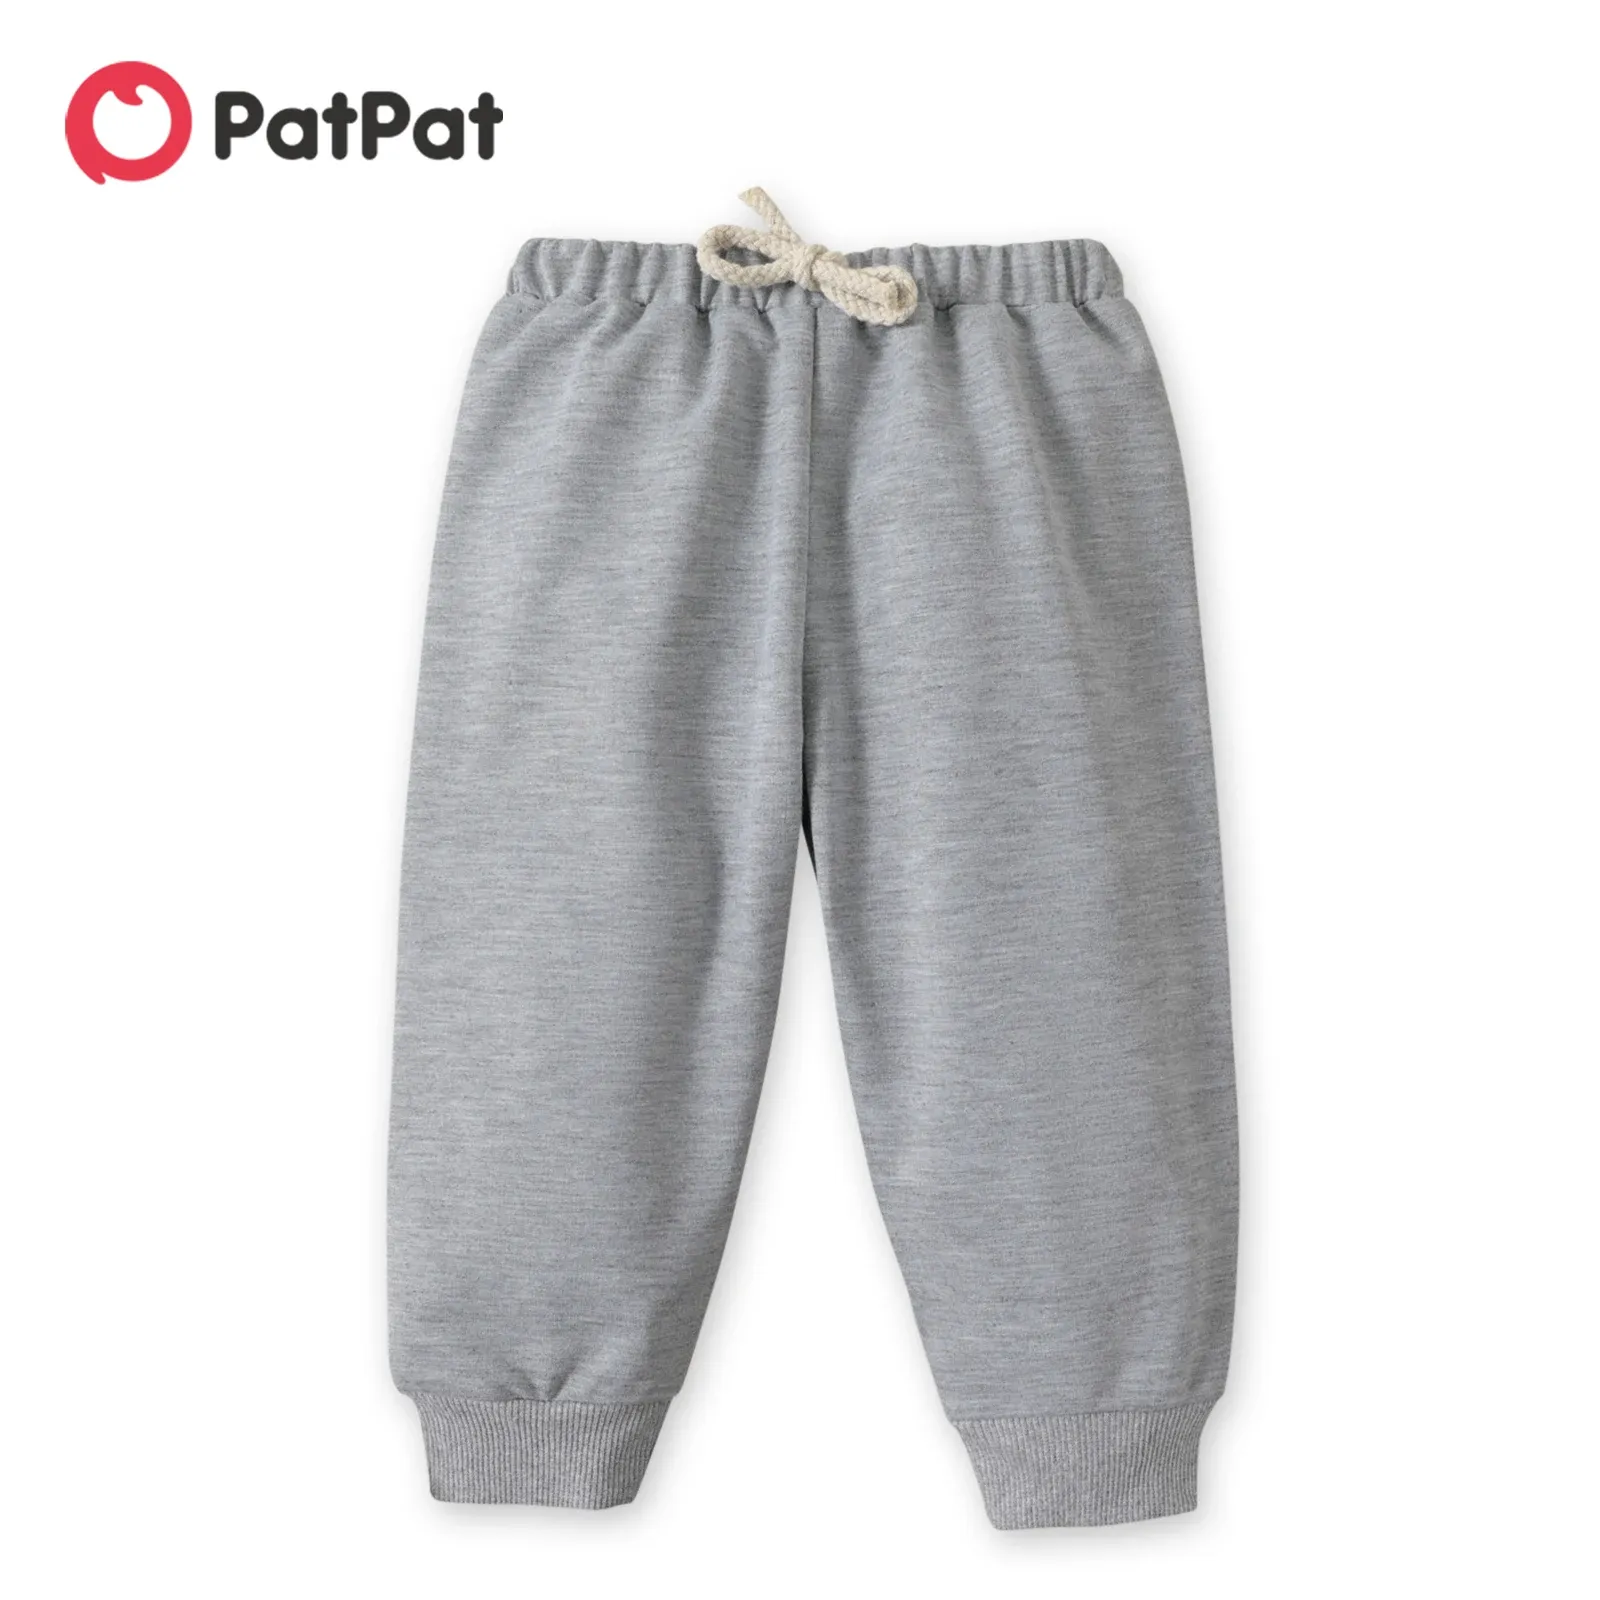 Pants Patpat Baby Boy/Girl Solid Elasticized Midj Sweatpants Joggers Pants